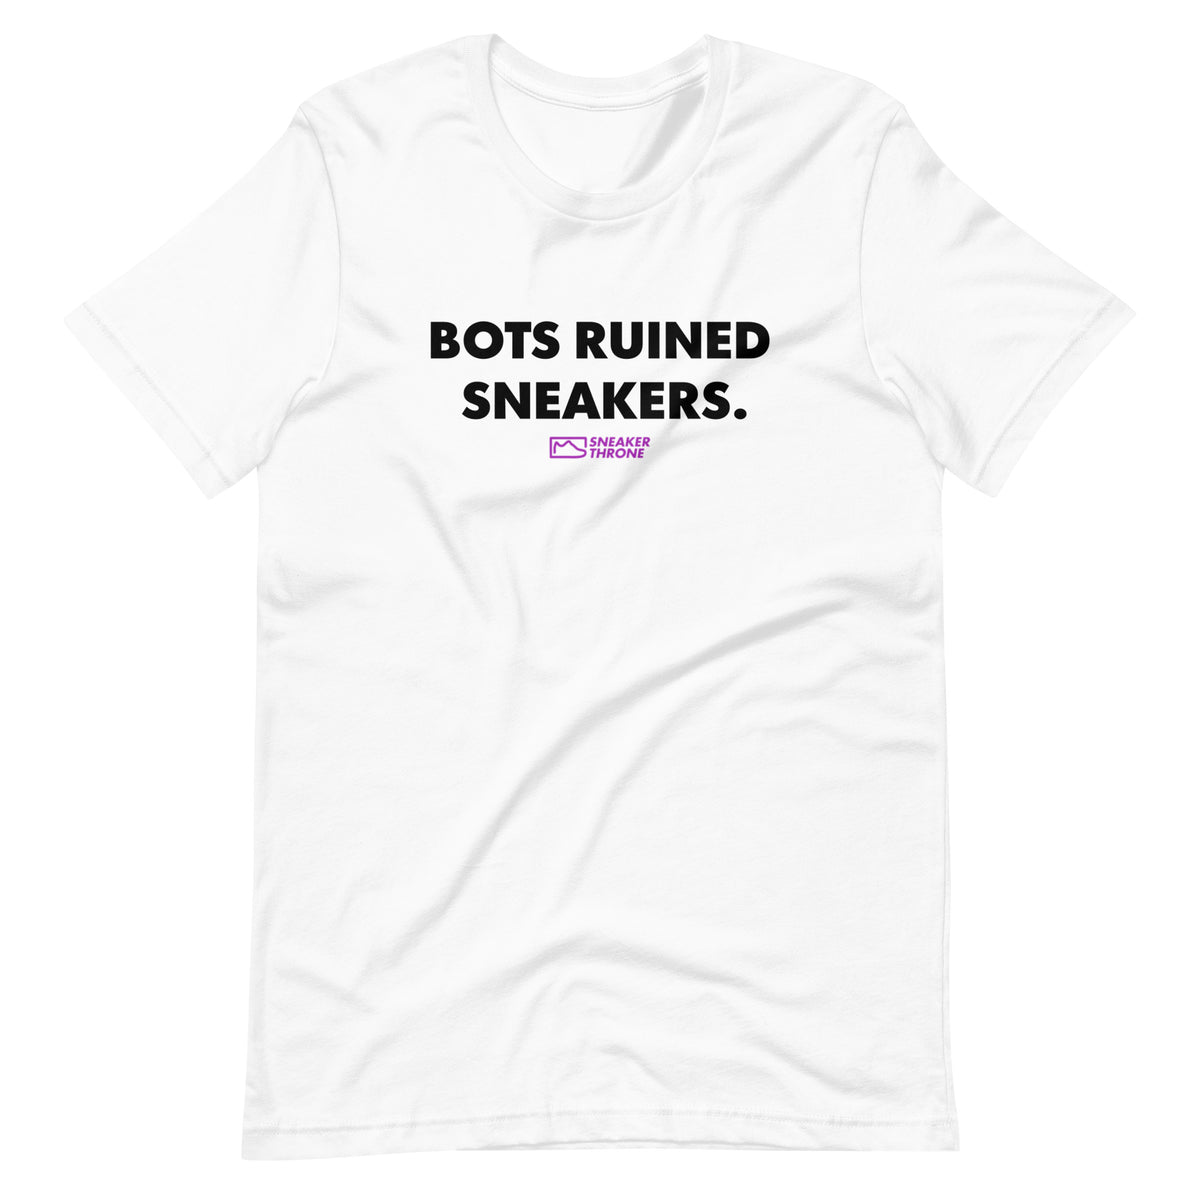 SNEAKER THRONE Bots Ruined Sneakers